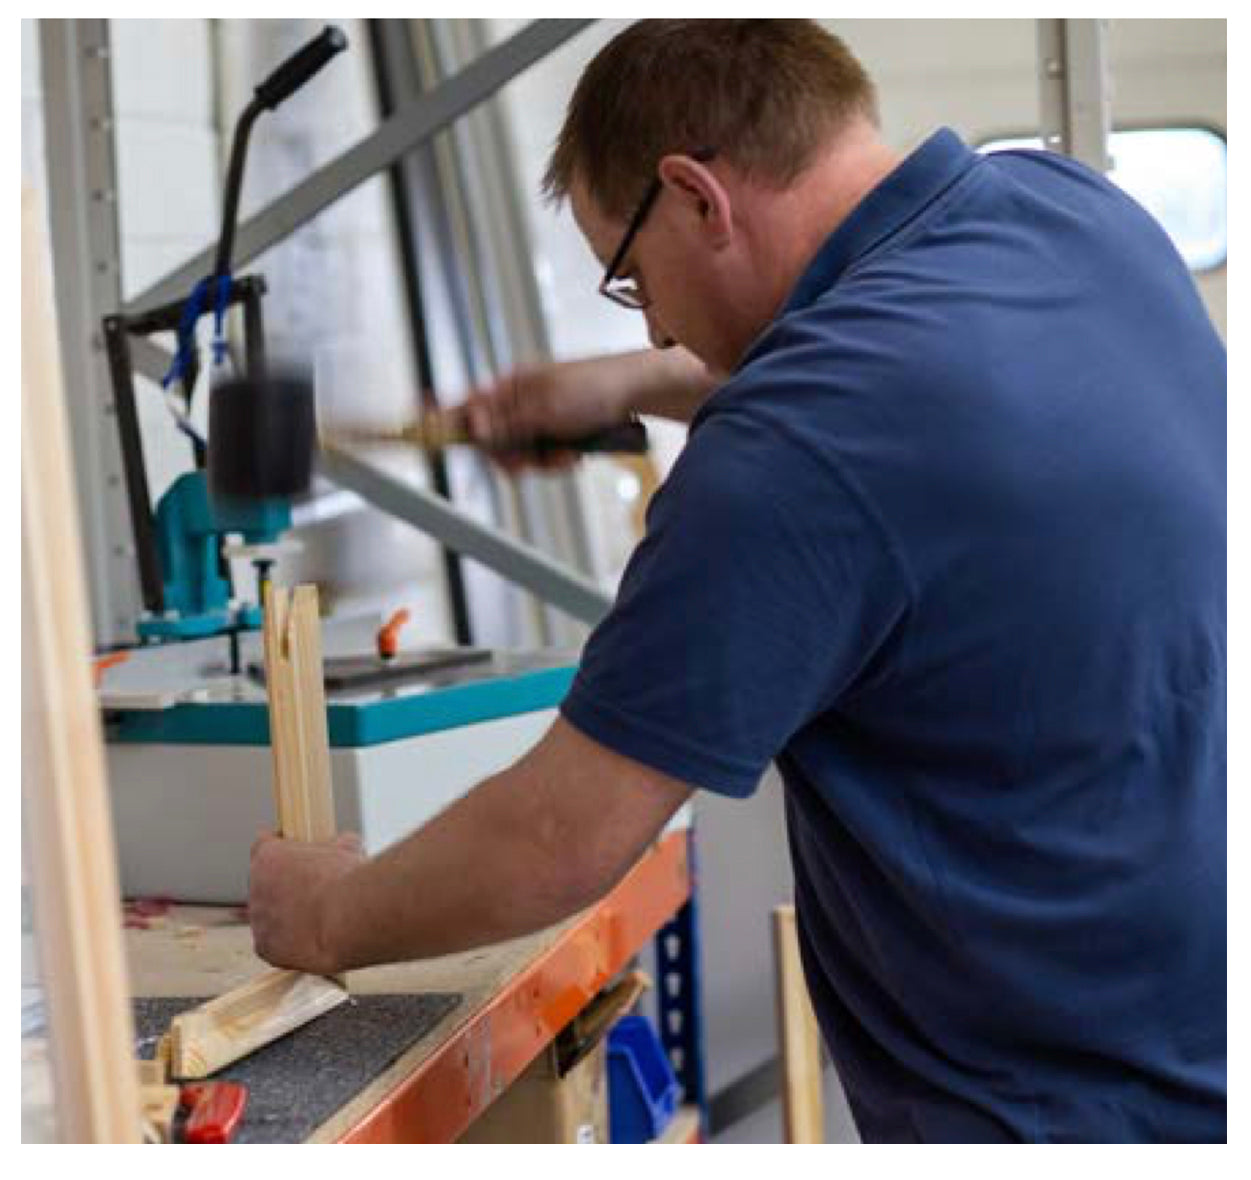 British craftsman in workshop making a wooden picture frame.